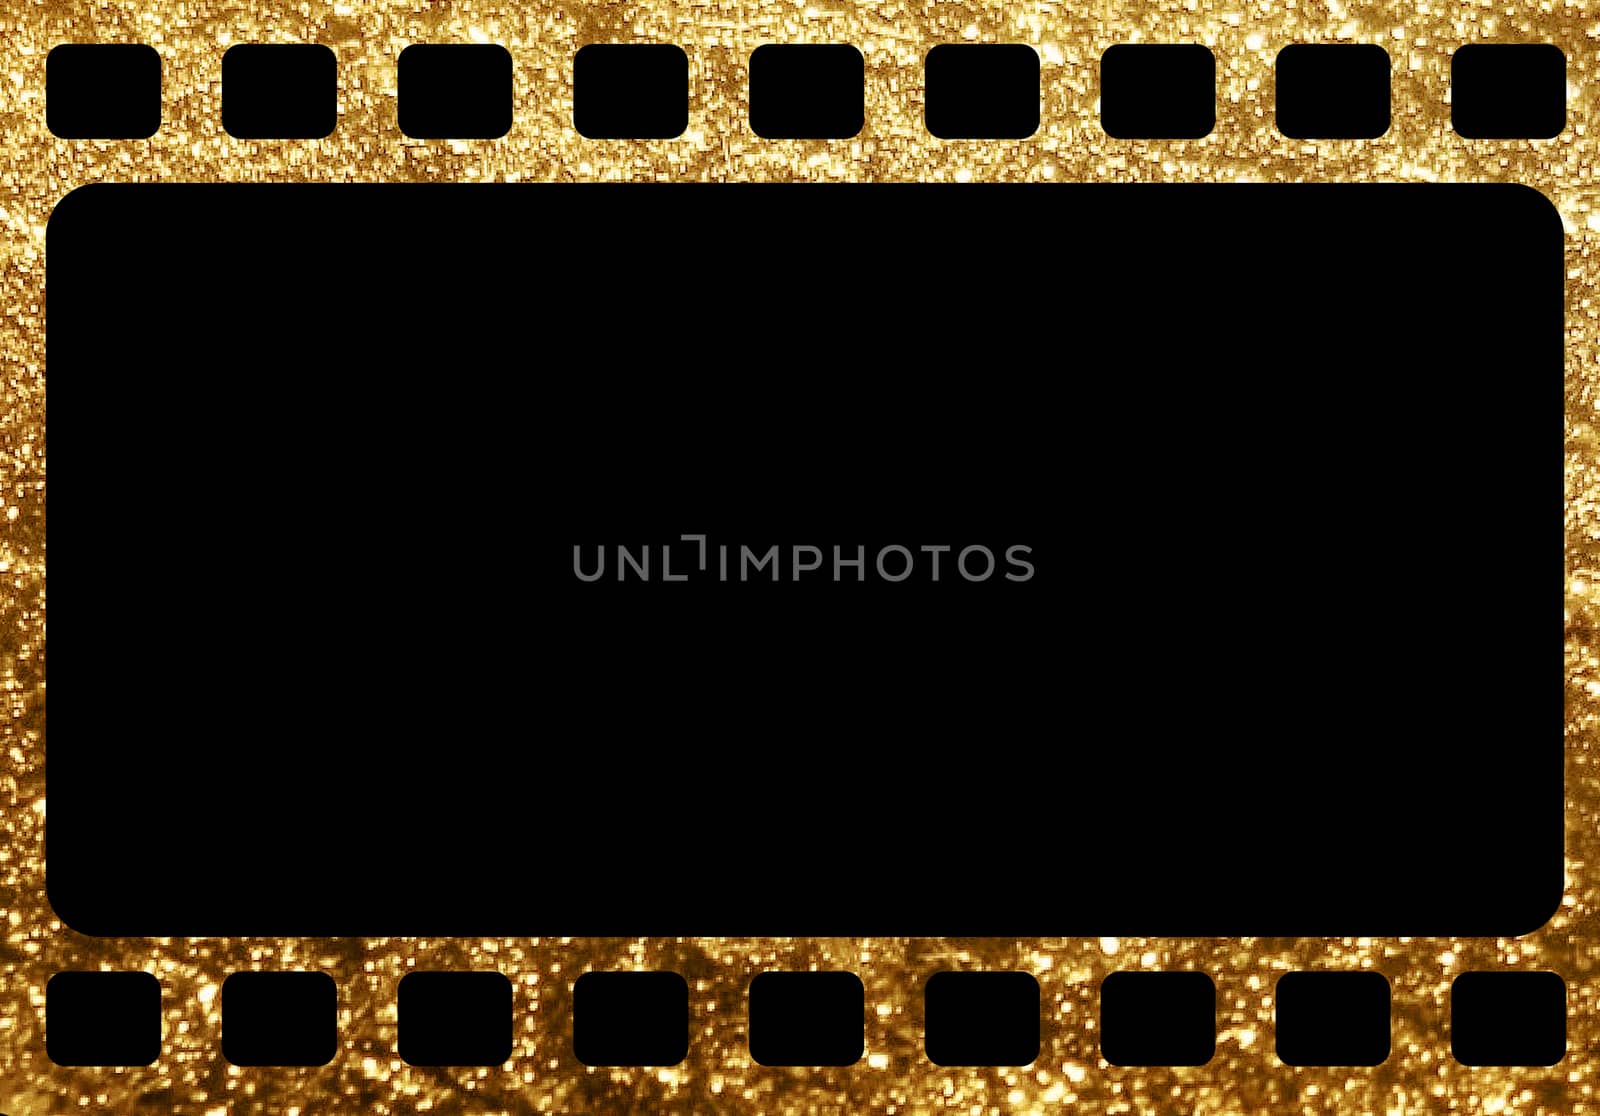 The horizontal blank tranitional retro film frame template background